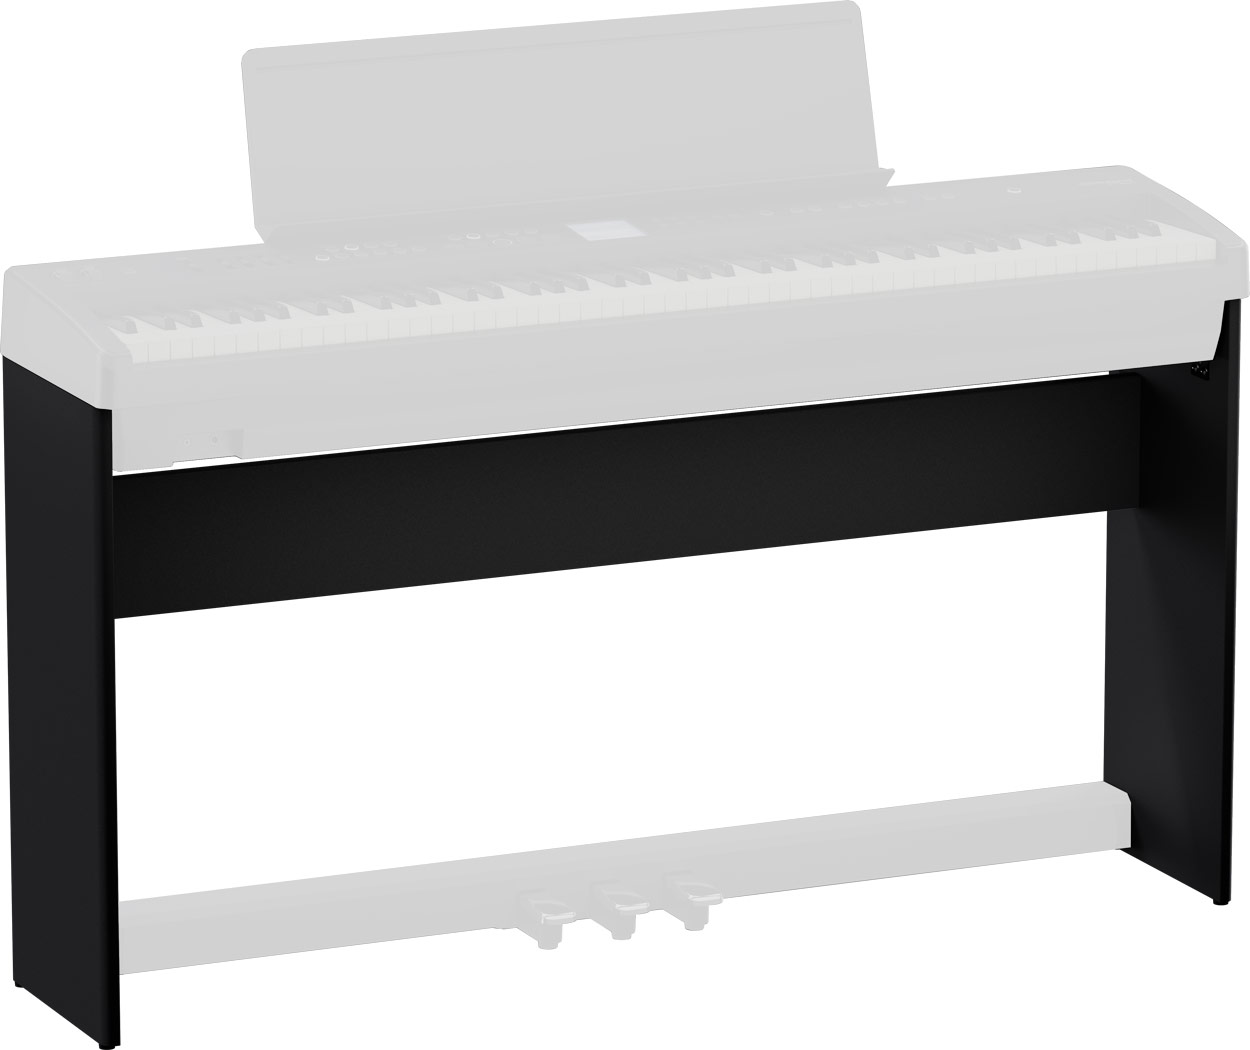 Se Roland KSFE50 Stativ til FP-E50 Digital Piano hos Drum City